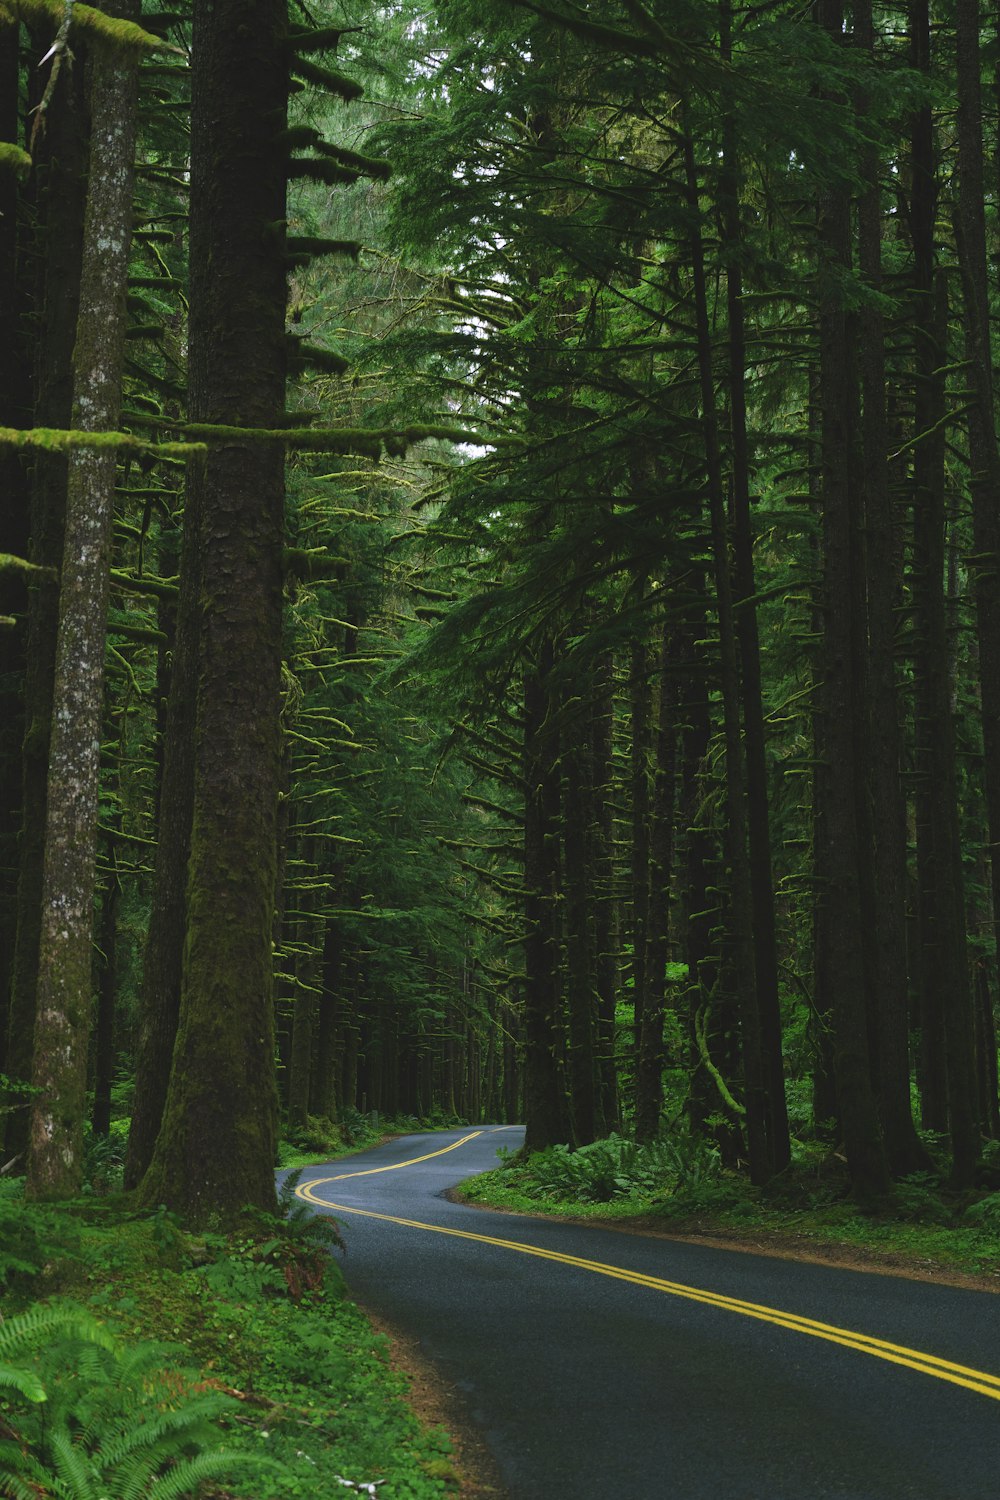 un camino en medio de un bosque con árboles altos